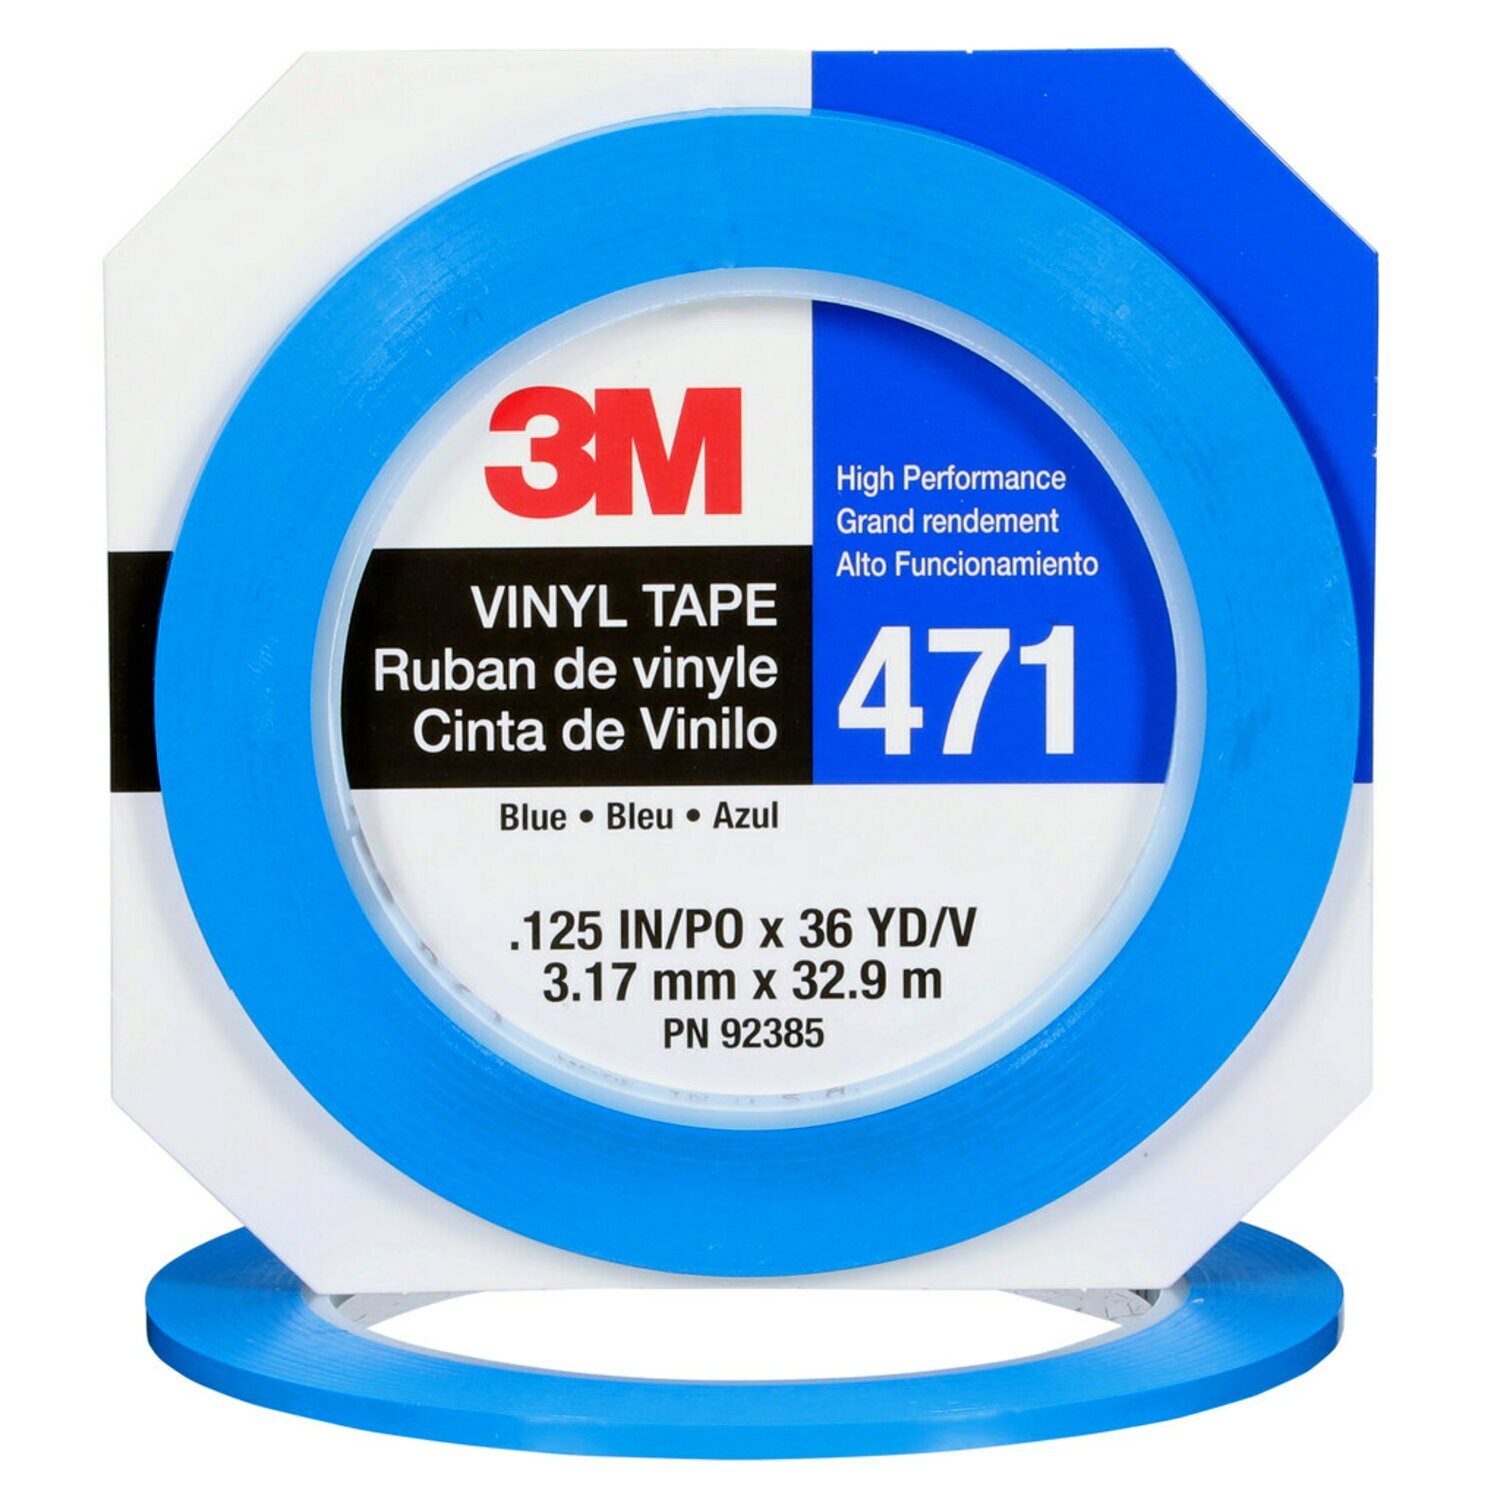 7100044649 - 3M Vinyl Tape 471, Blue, 1/8 in x 36 yd, 5.2 mil, 144 rolls per case,
Boxed